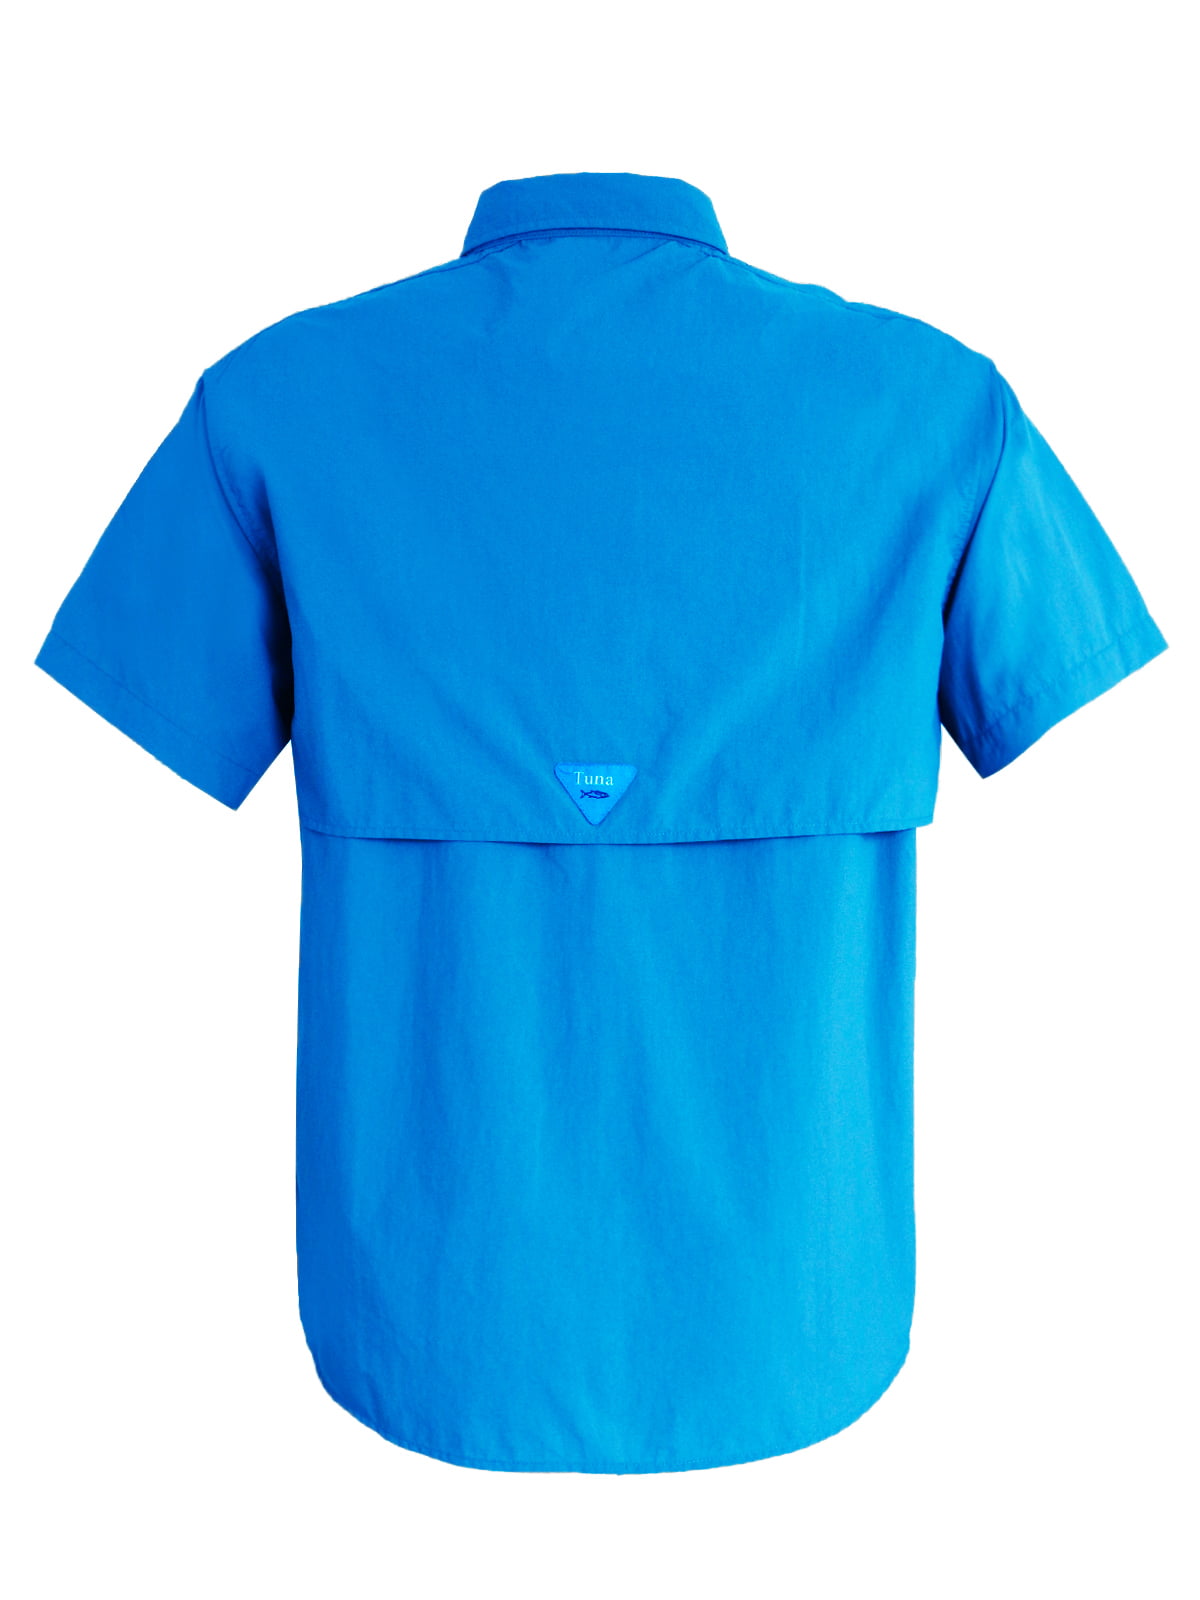 Tuna Men's UV UPF 50+ Sun Protection Waterproof Breathable Outdoor SPF  Hiking Camping Magellan Fishing Short Sleeve Shirts (Collegiate Navy #5 L)  